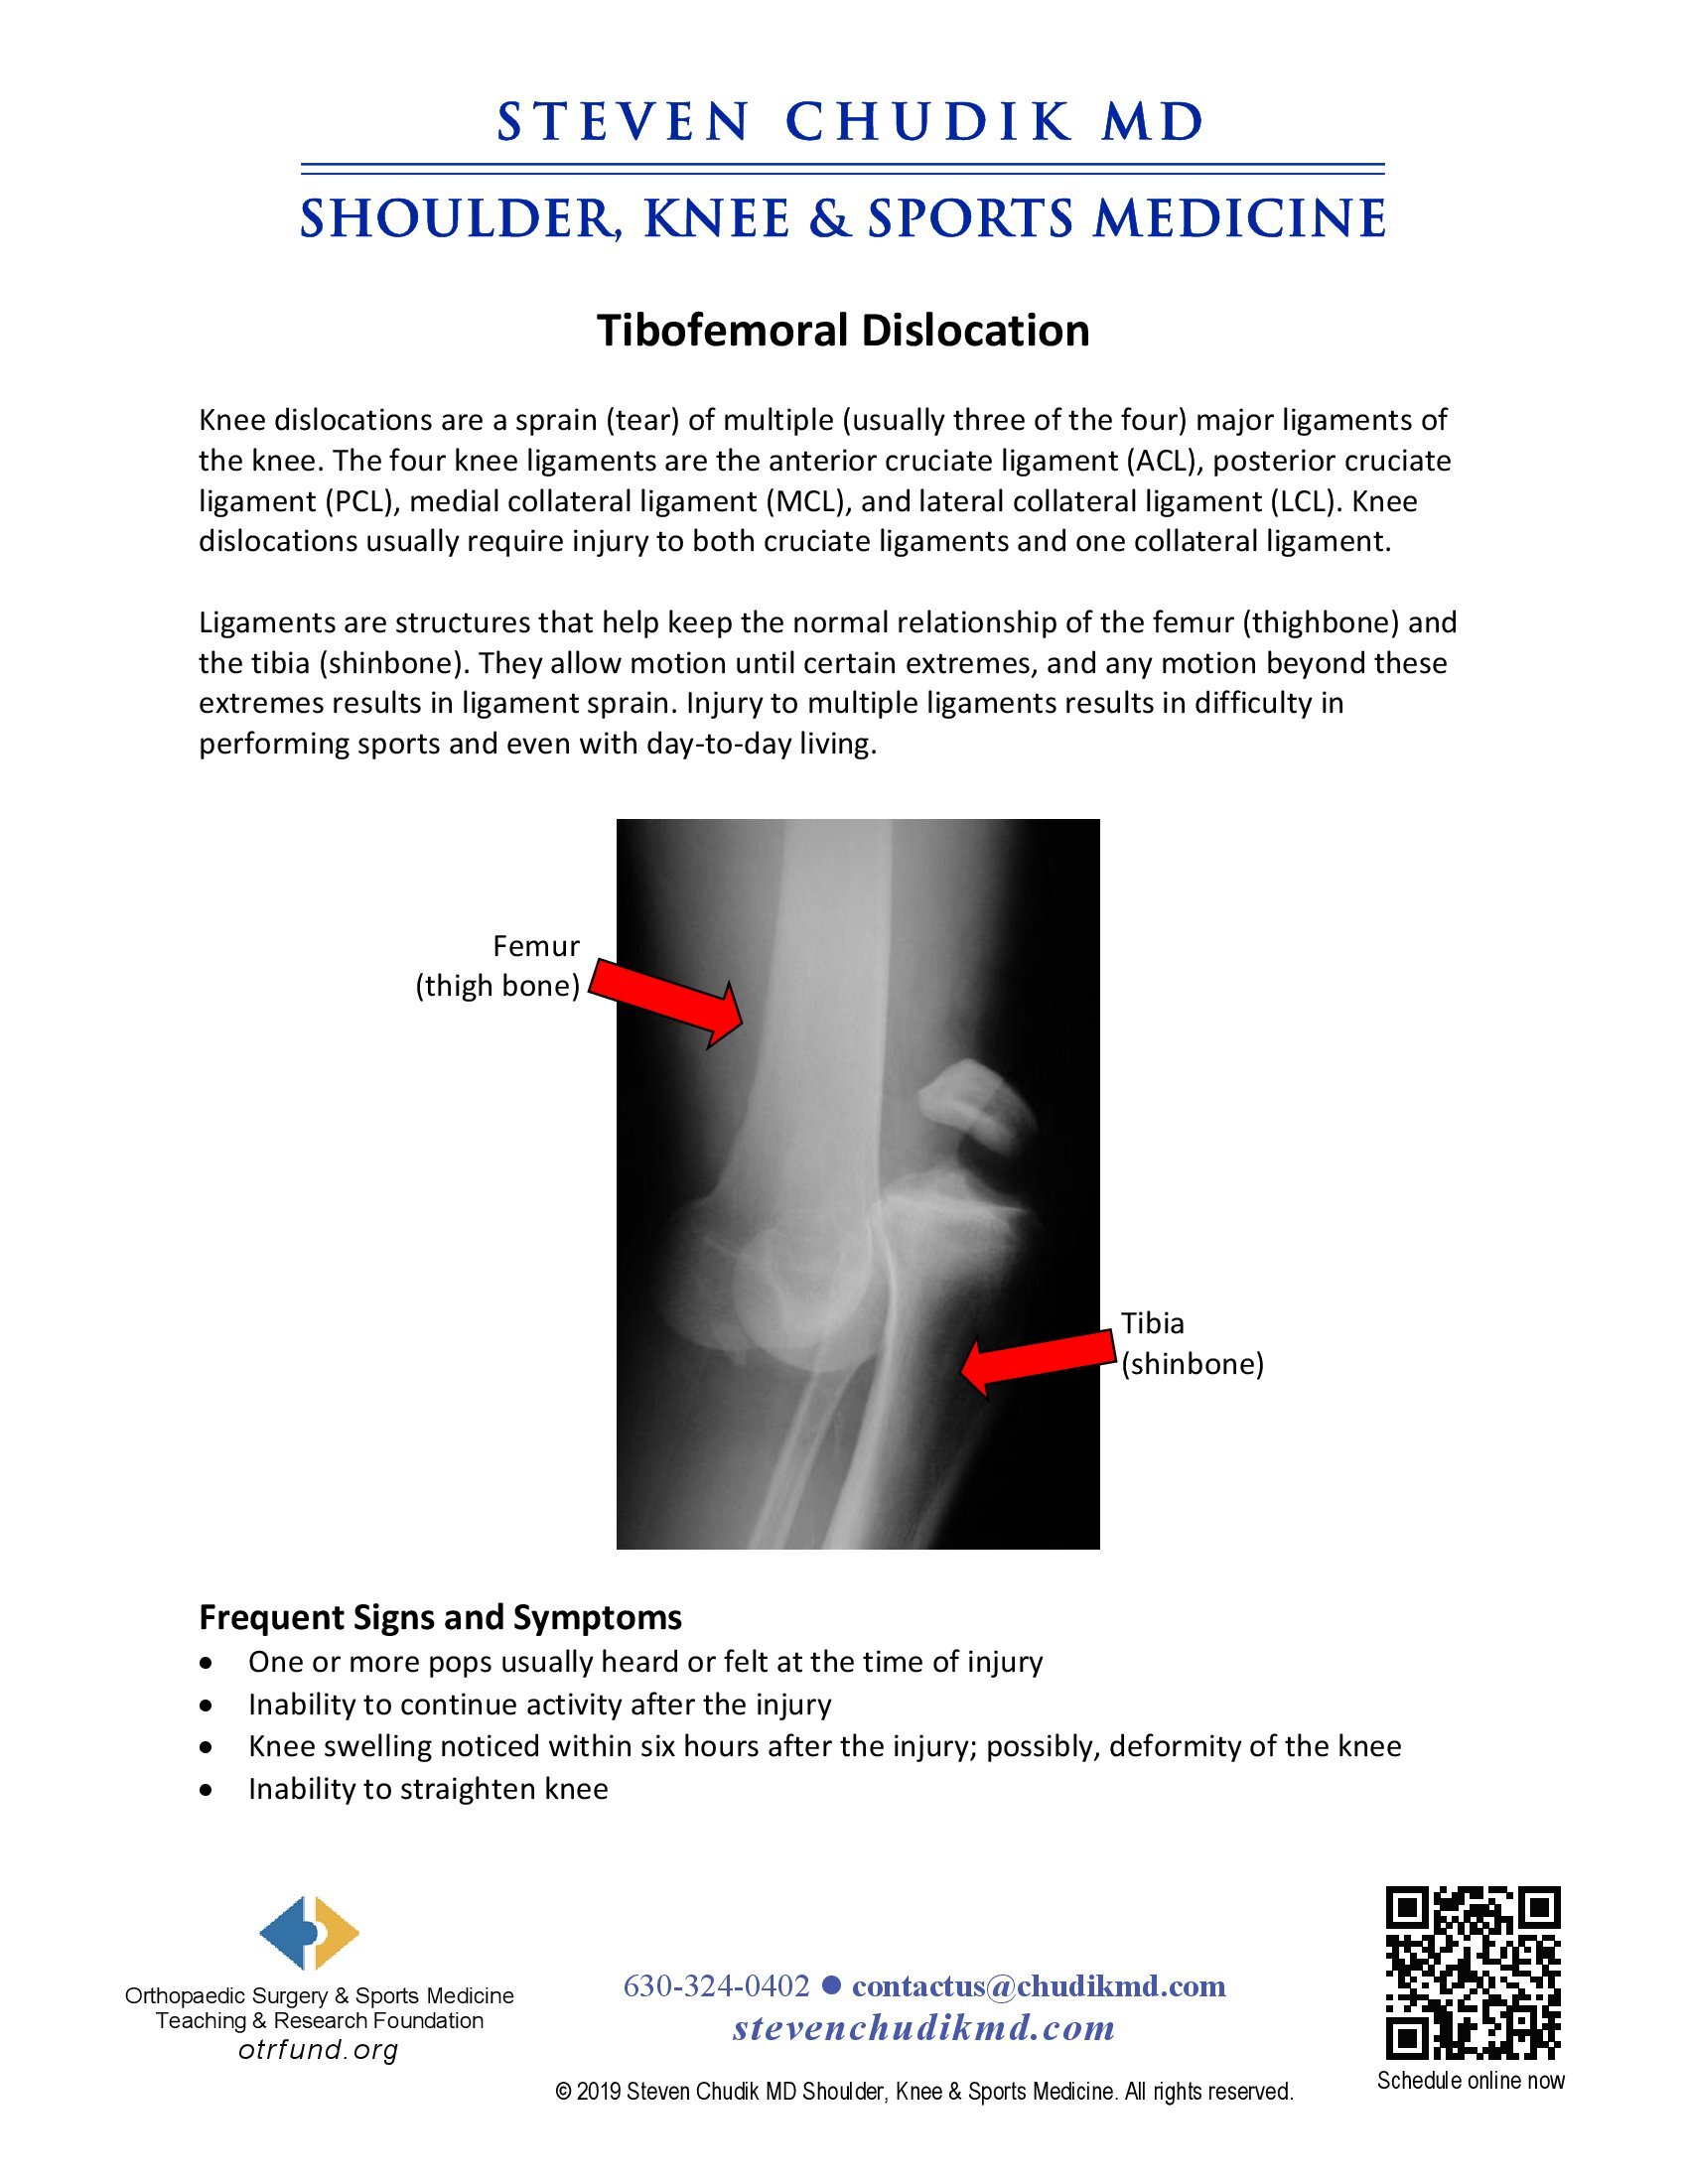 Knee (Tibiofemoral) Dislocation - Steven Chudik MD